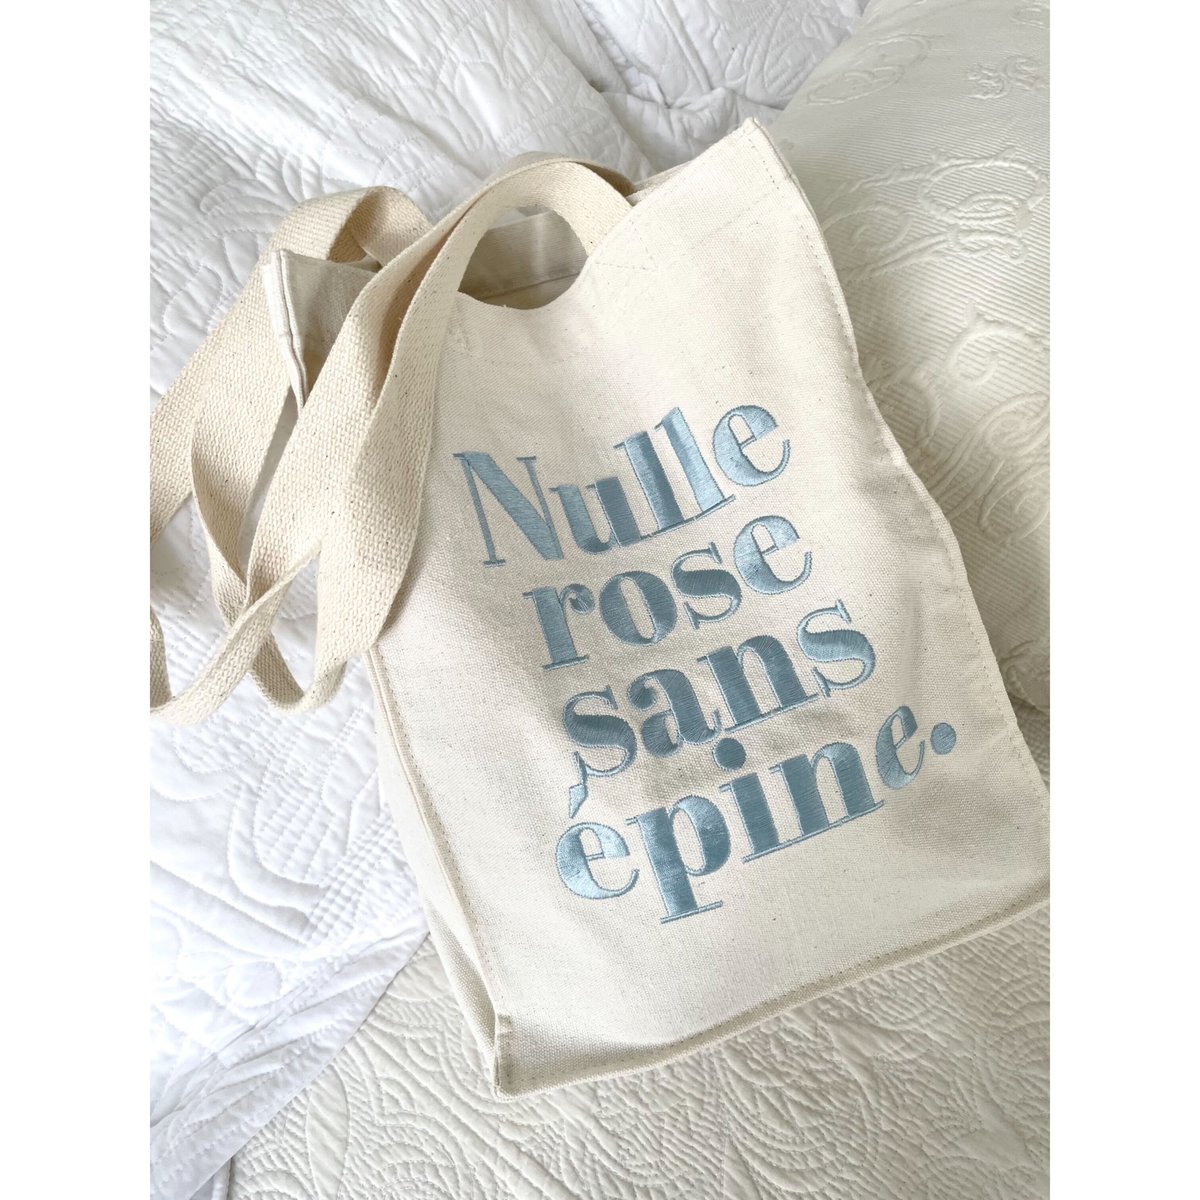 Nulle rose sans épine embroidery tote bag ivory×ice blue